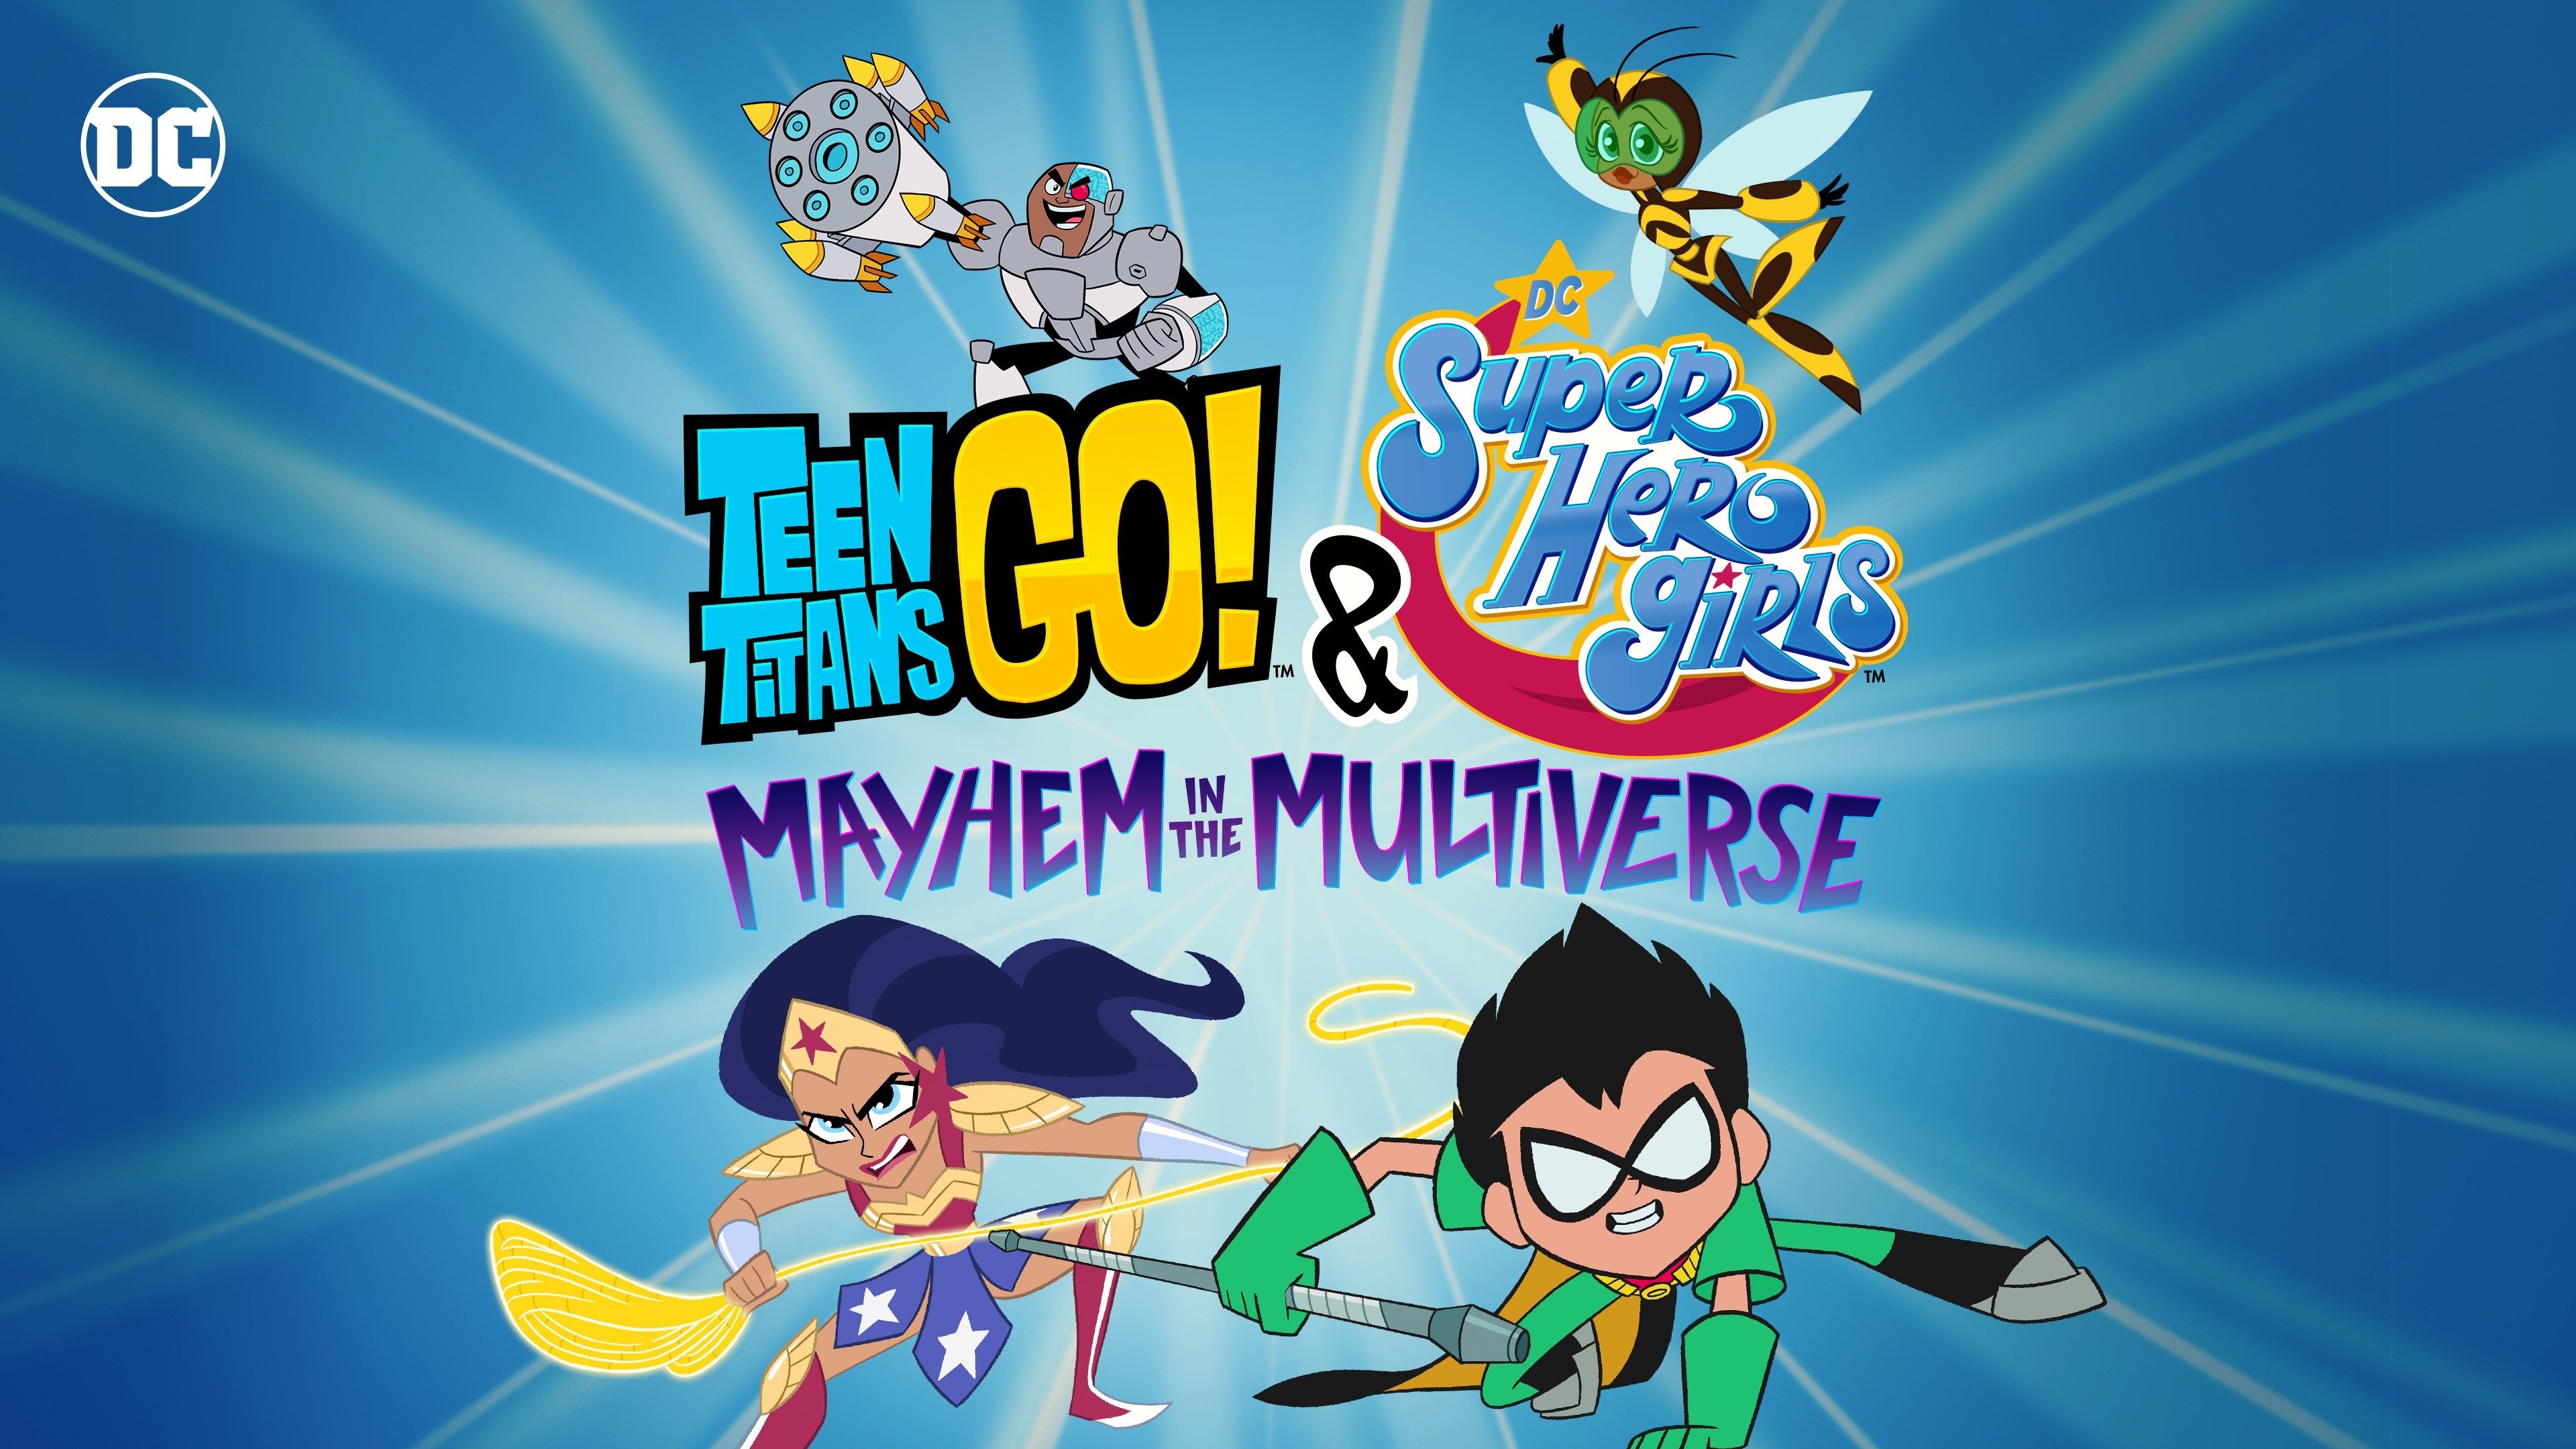 Teen Titans Go! & DC Super Hero Girls: Five Fabulous New